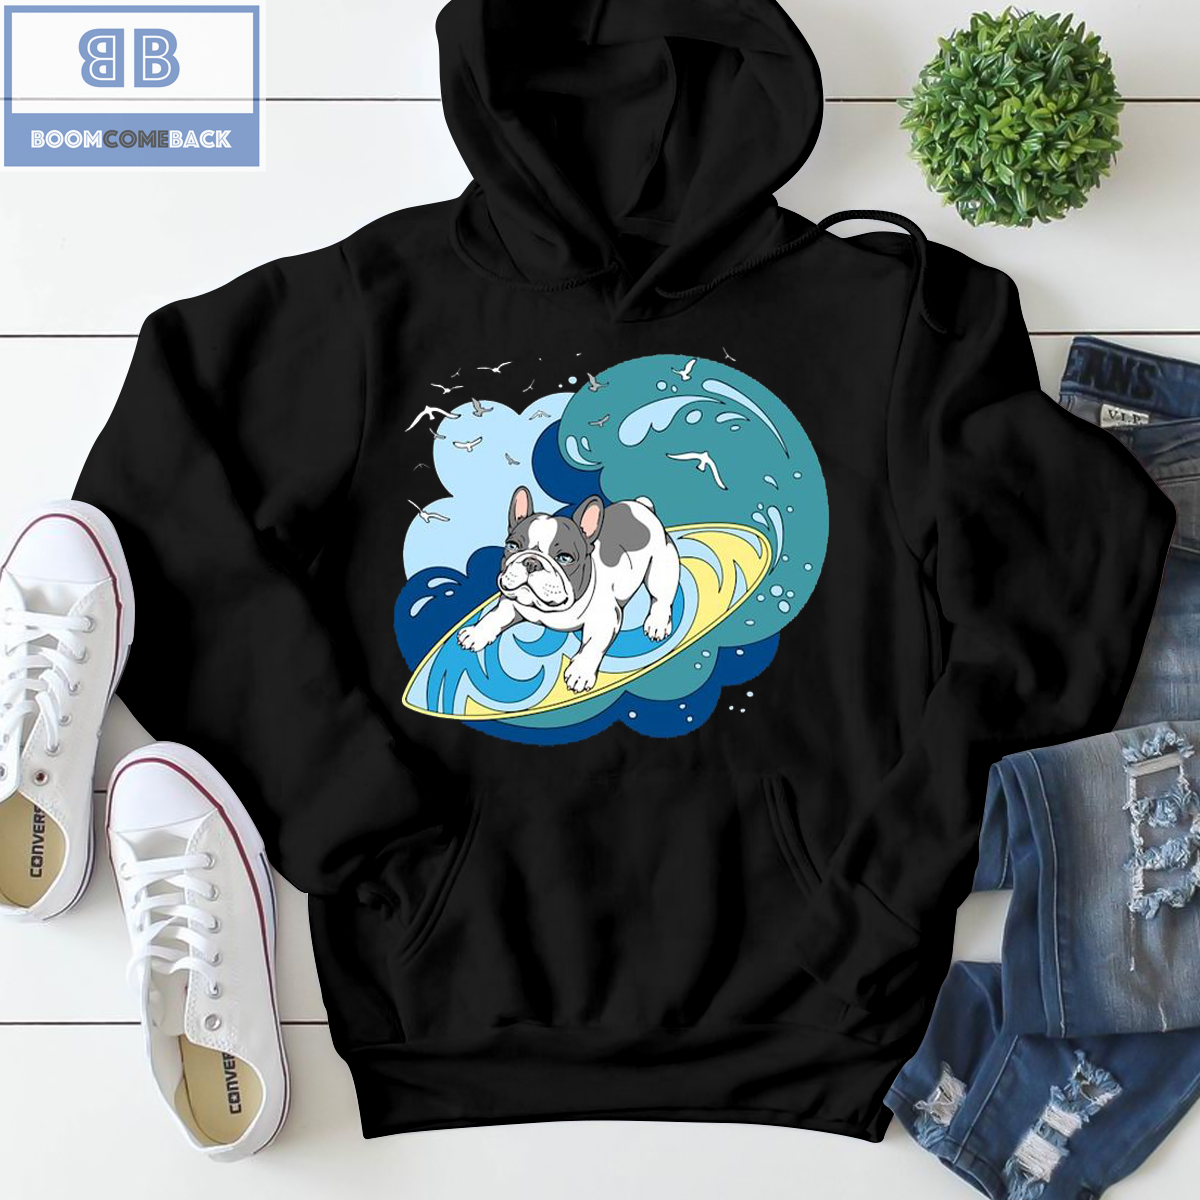 French Bulldog On A Surf Shirt